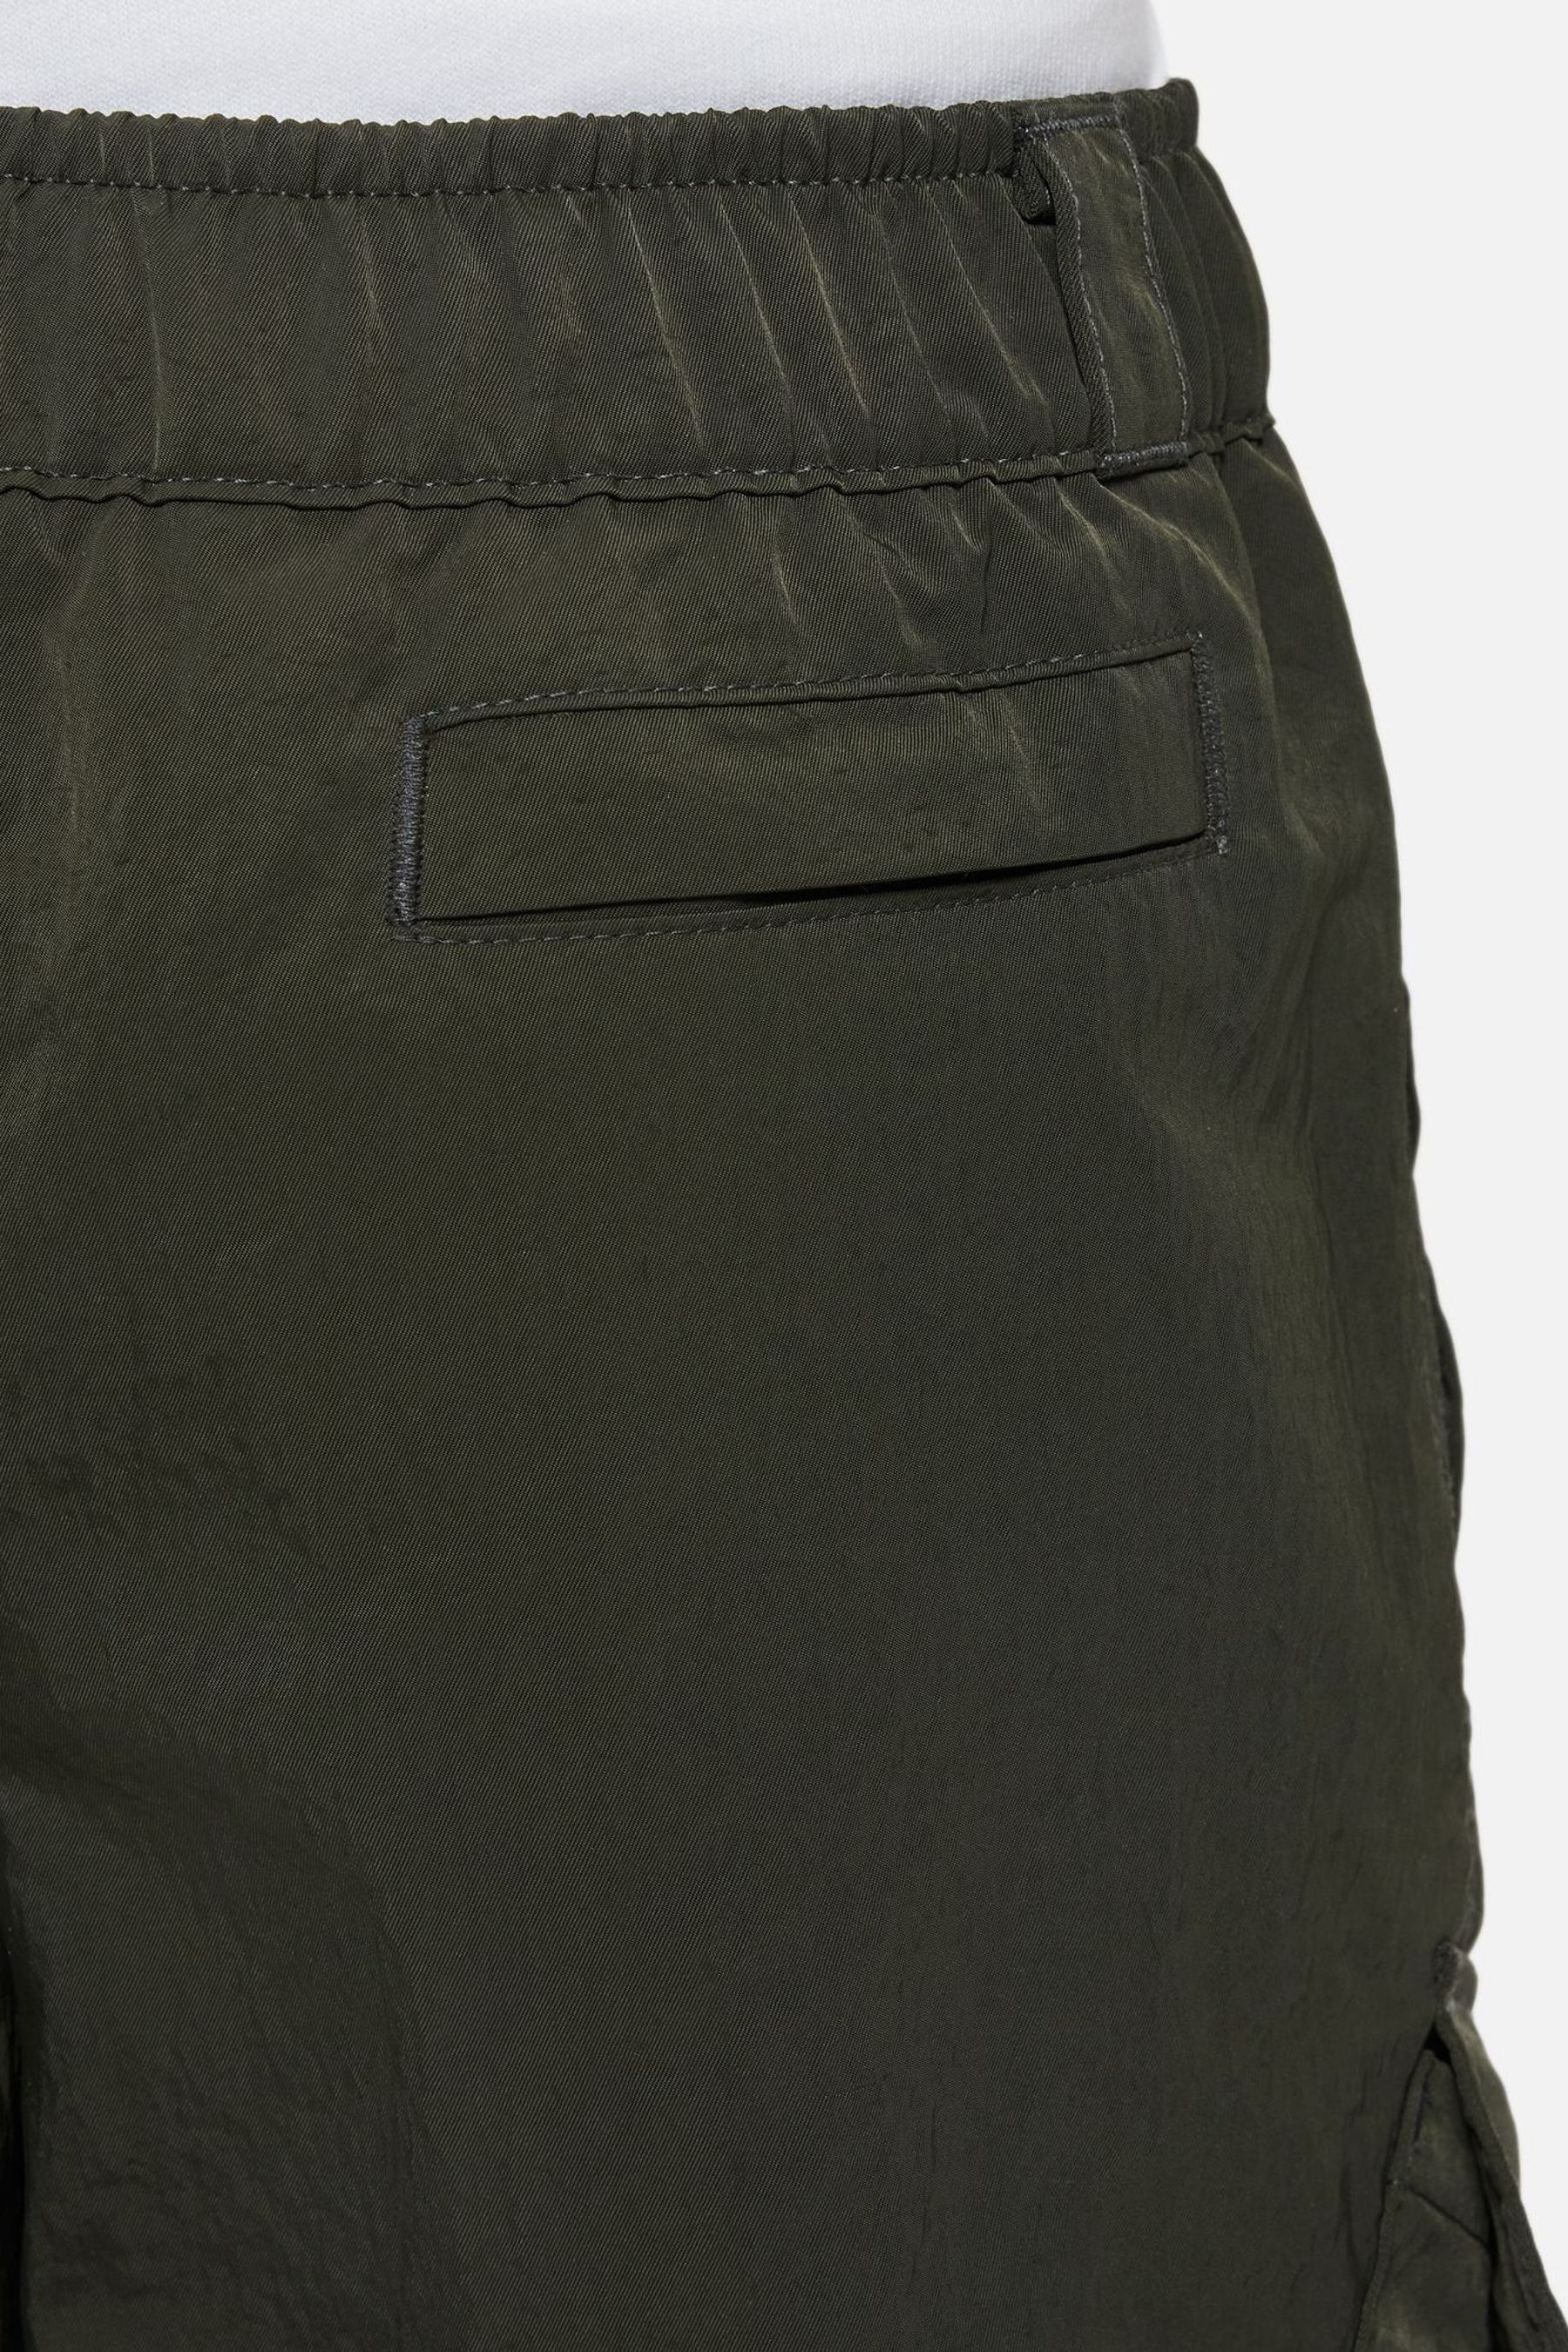 Buy Nike Khaki Green Woven Cargo Shorts from the Next UK online shop